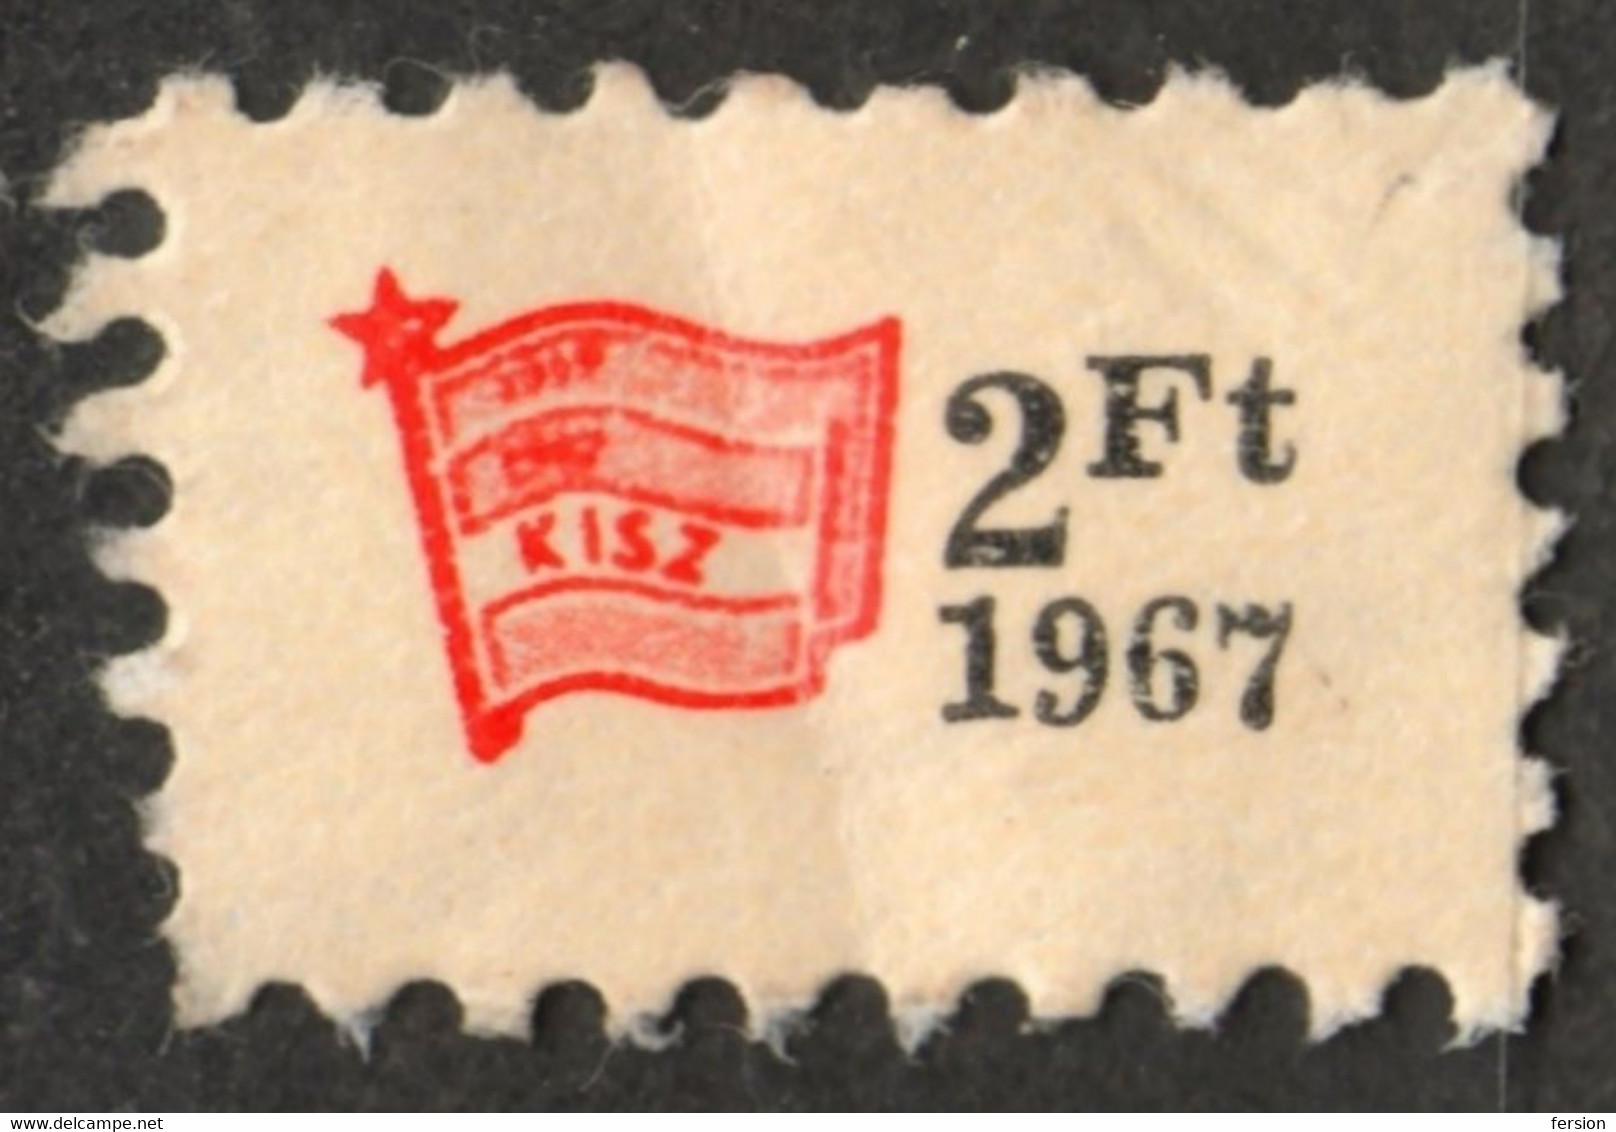 KISZ Hungarian Young Communist League FLAG Red Star - Member Charity LABEL CINDERELLA VIGNETTE - Hungary 1967 - Dienstmarken